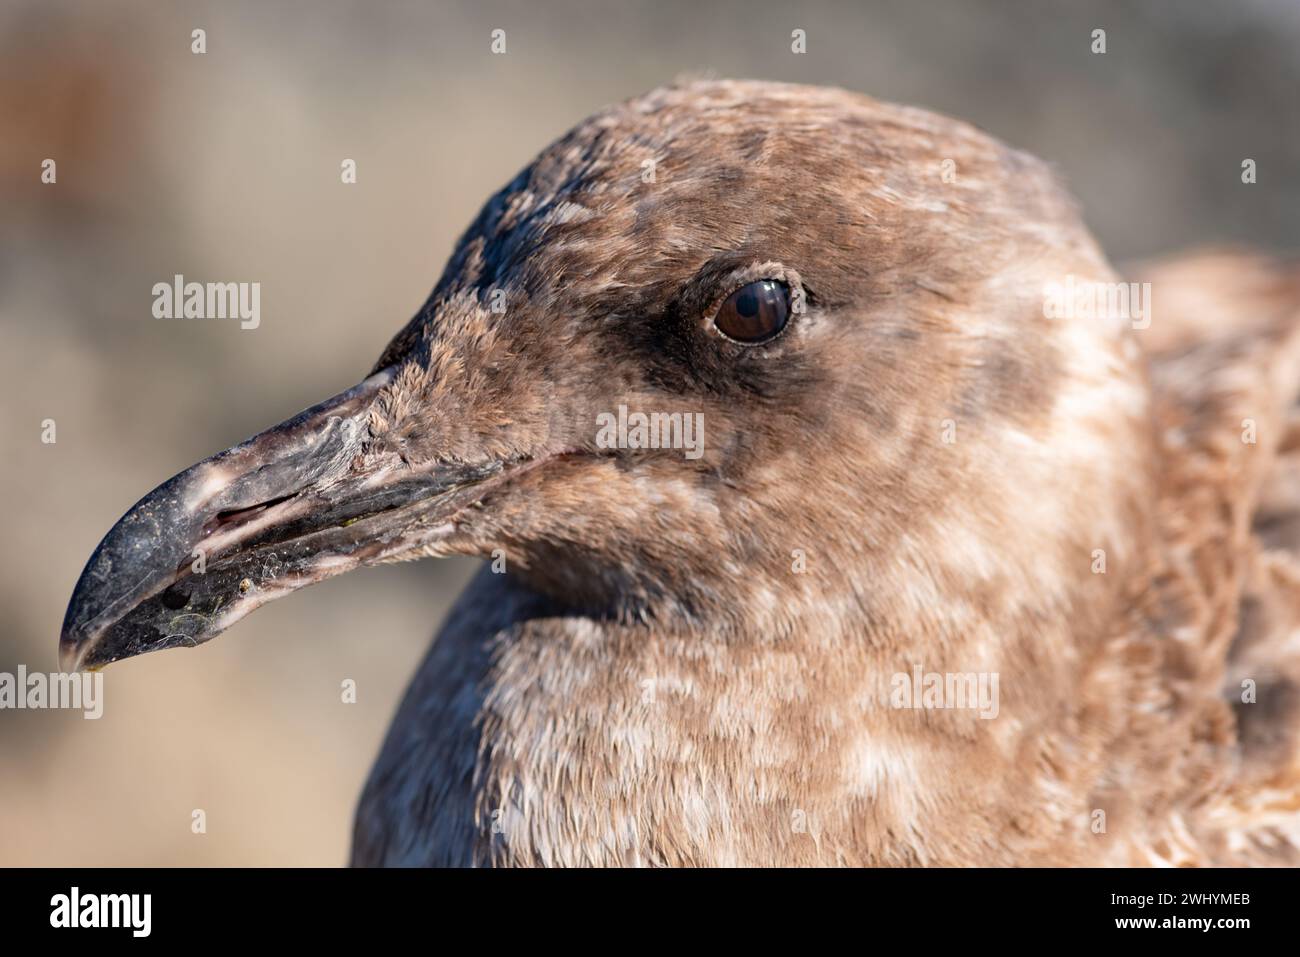 Macro photography, Seagull eyeball, Close-up view, Bird eye, Detailed feathers, Avian anatomy, Coastal wildlife, Extreme close-up Stock Photo